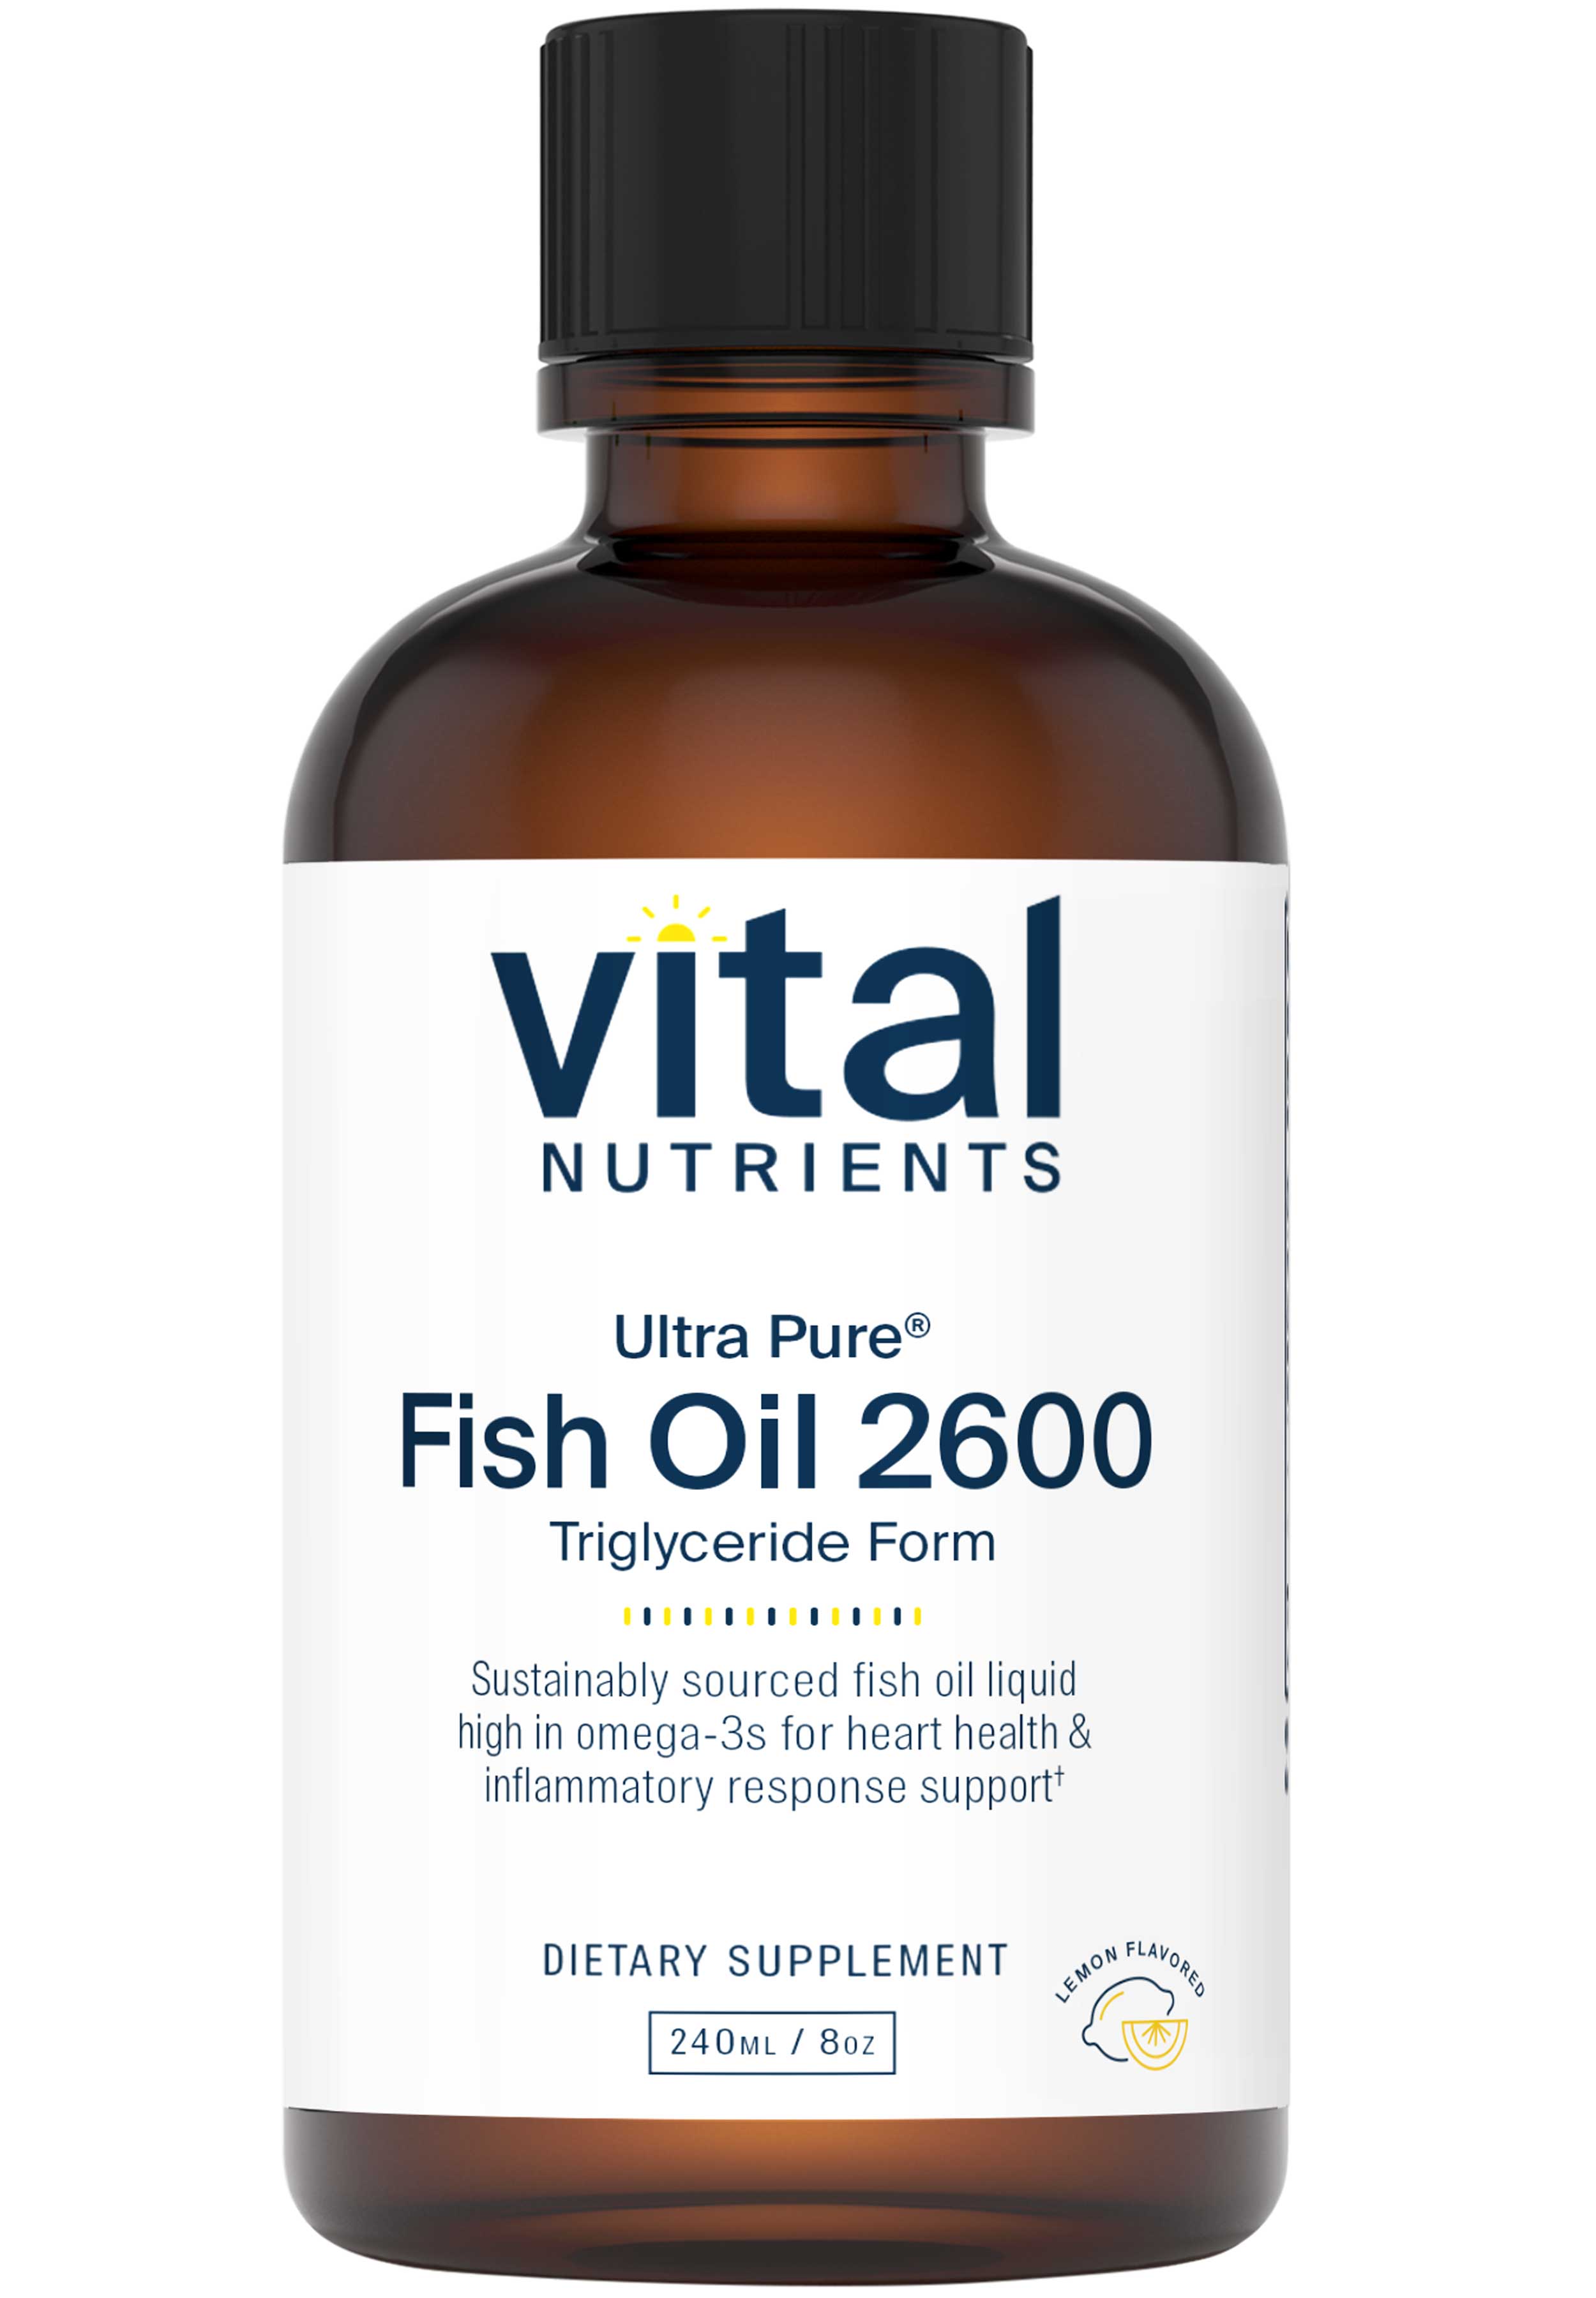 Vital Nutrients Ultra Pure® Fish Oil 2600